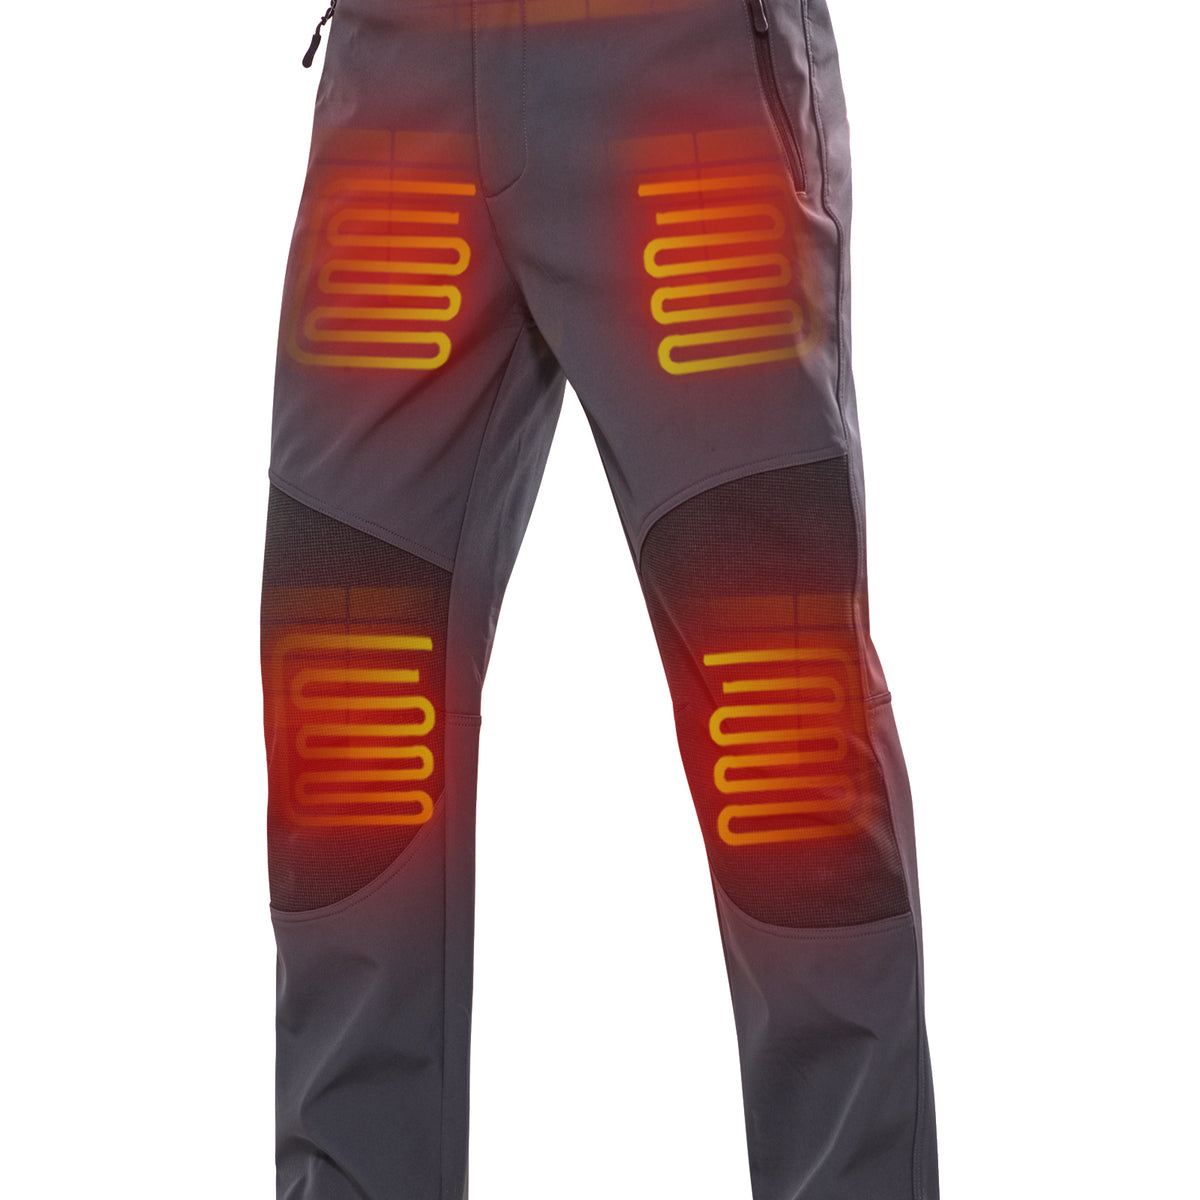 DEWBU® Men's Soft Shell Heated Pants with 12V Battery Pack Fleece